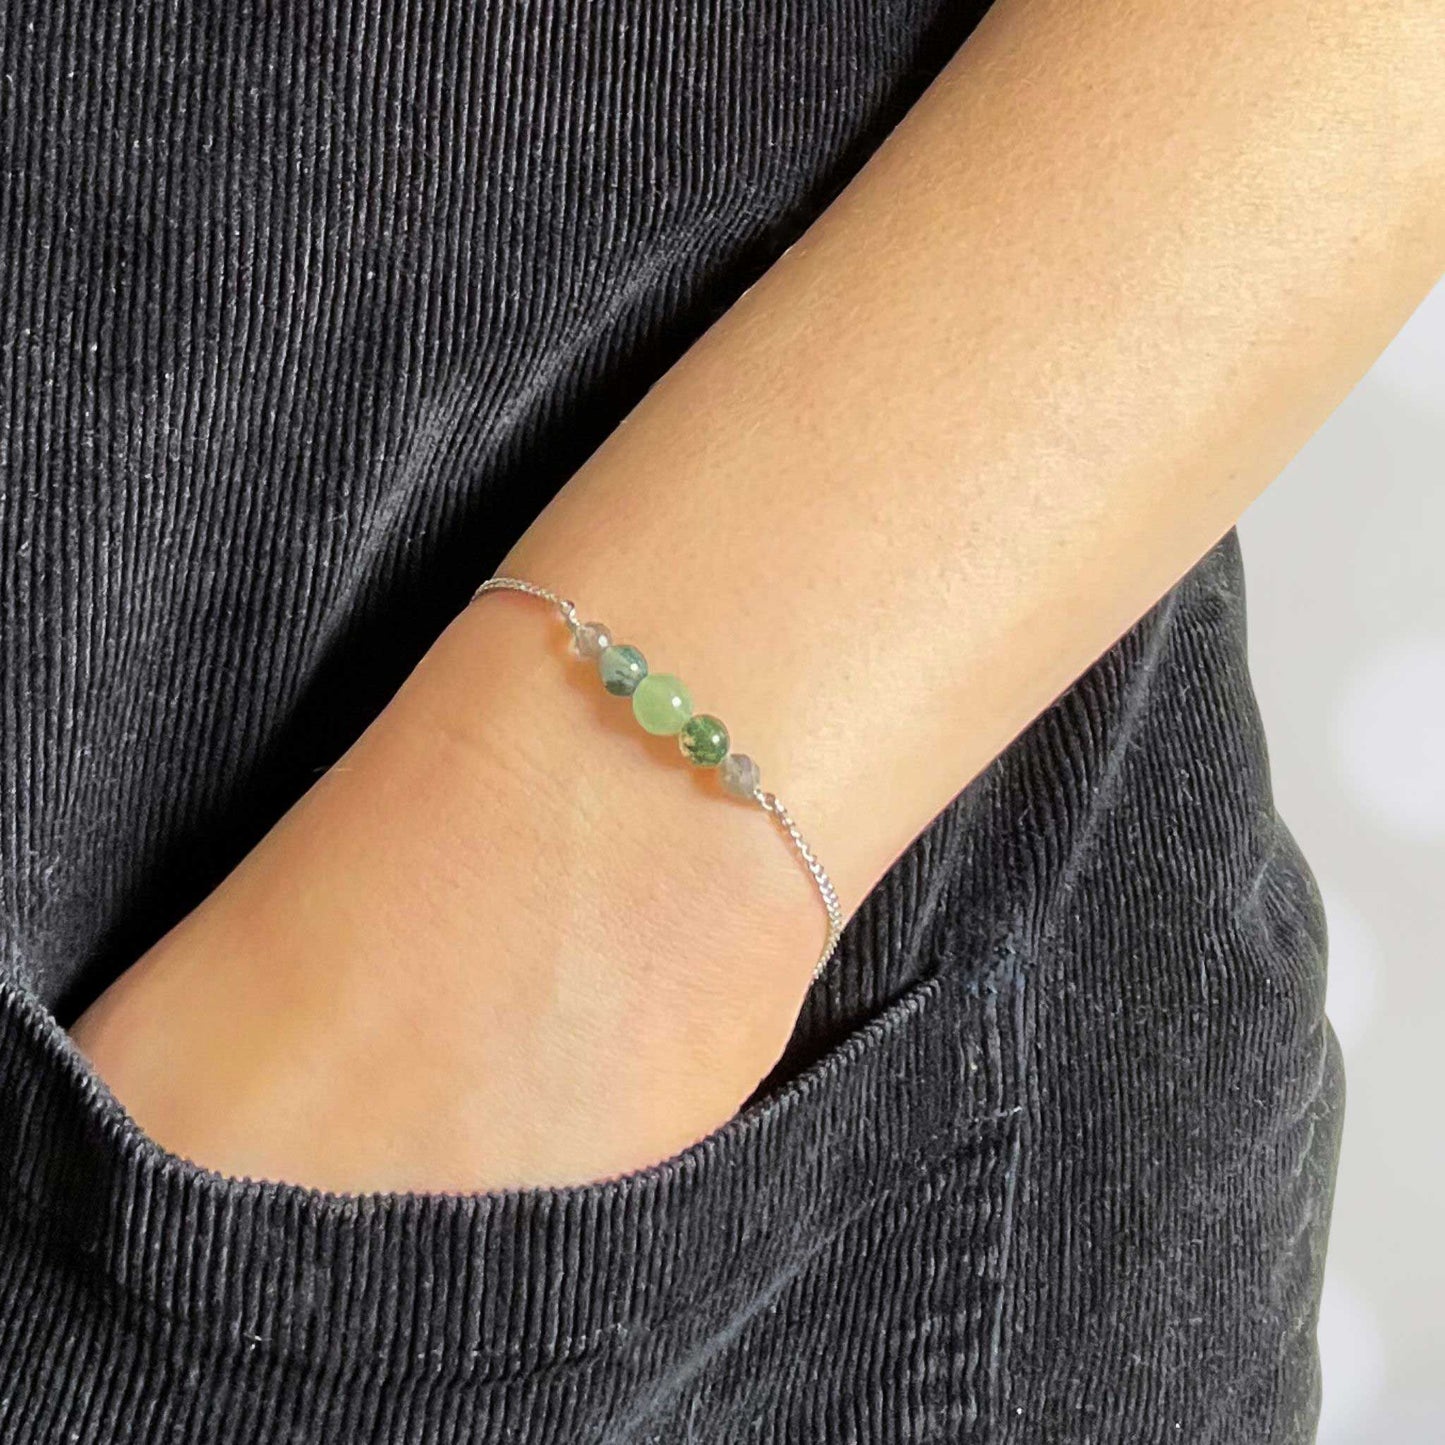 Woman with hand in pocket wearing green gemstone bracelet